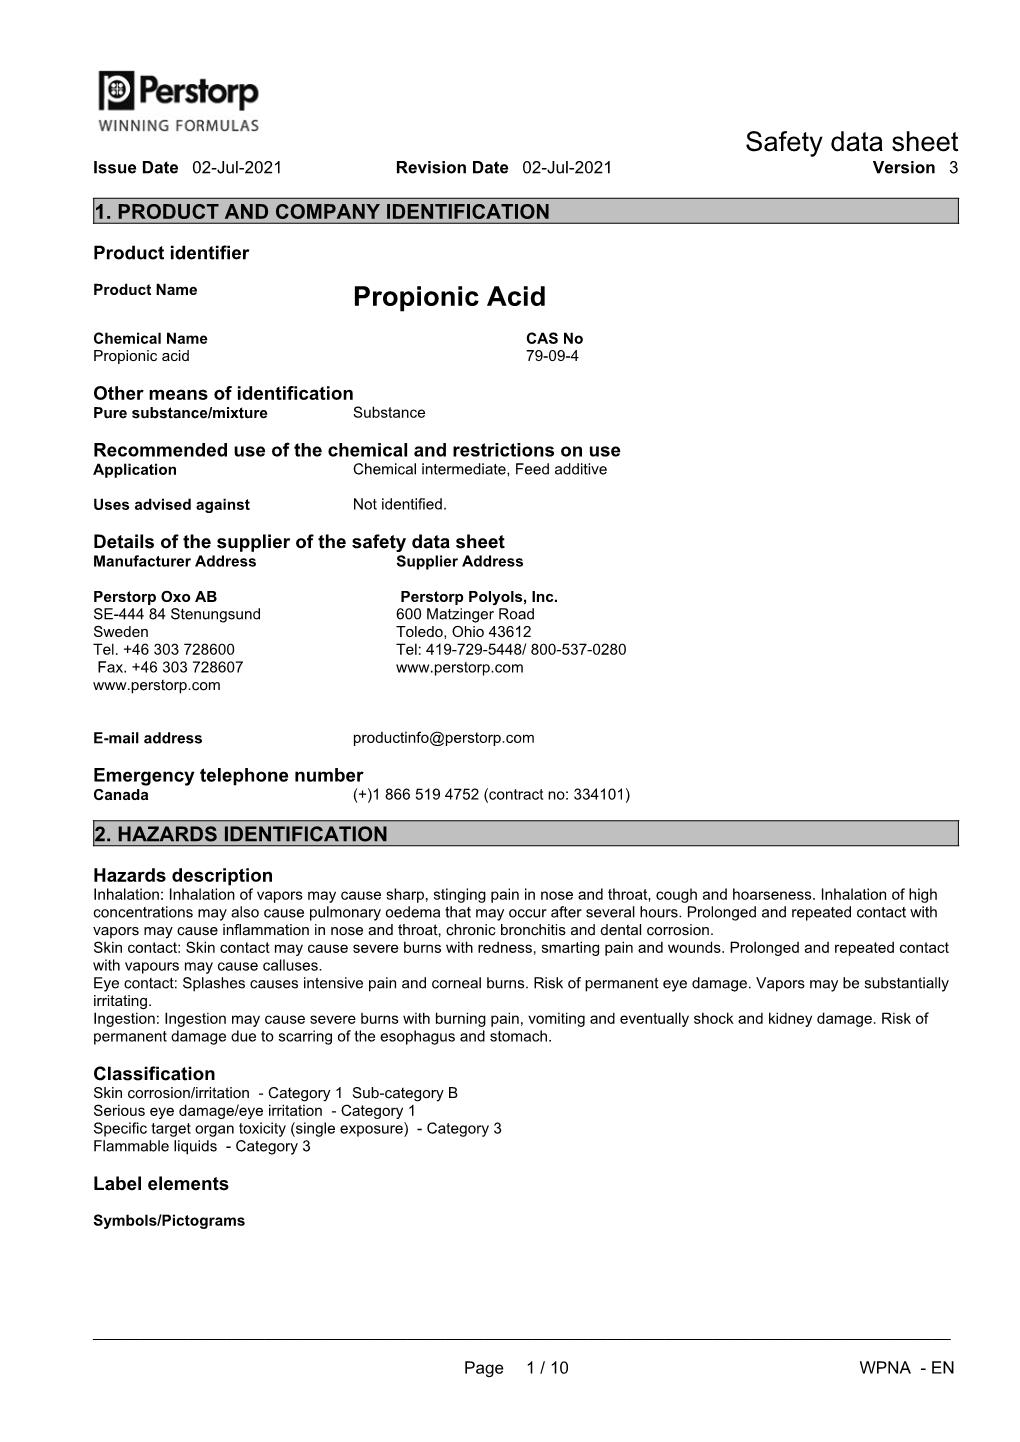 Safety Data Sheet Propionic Acid